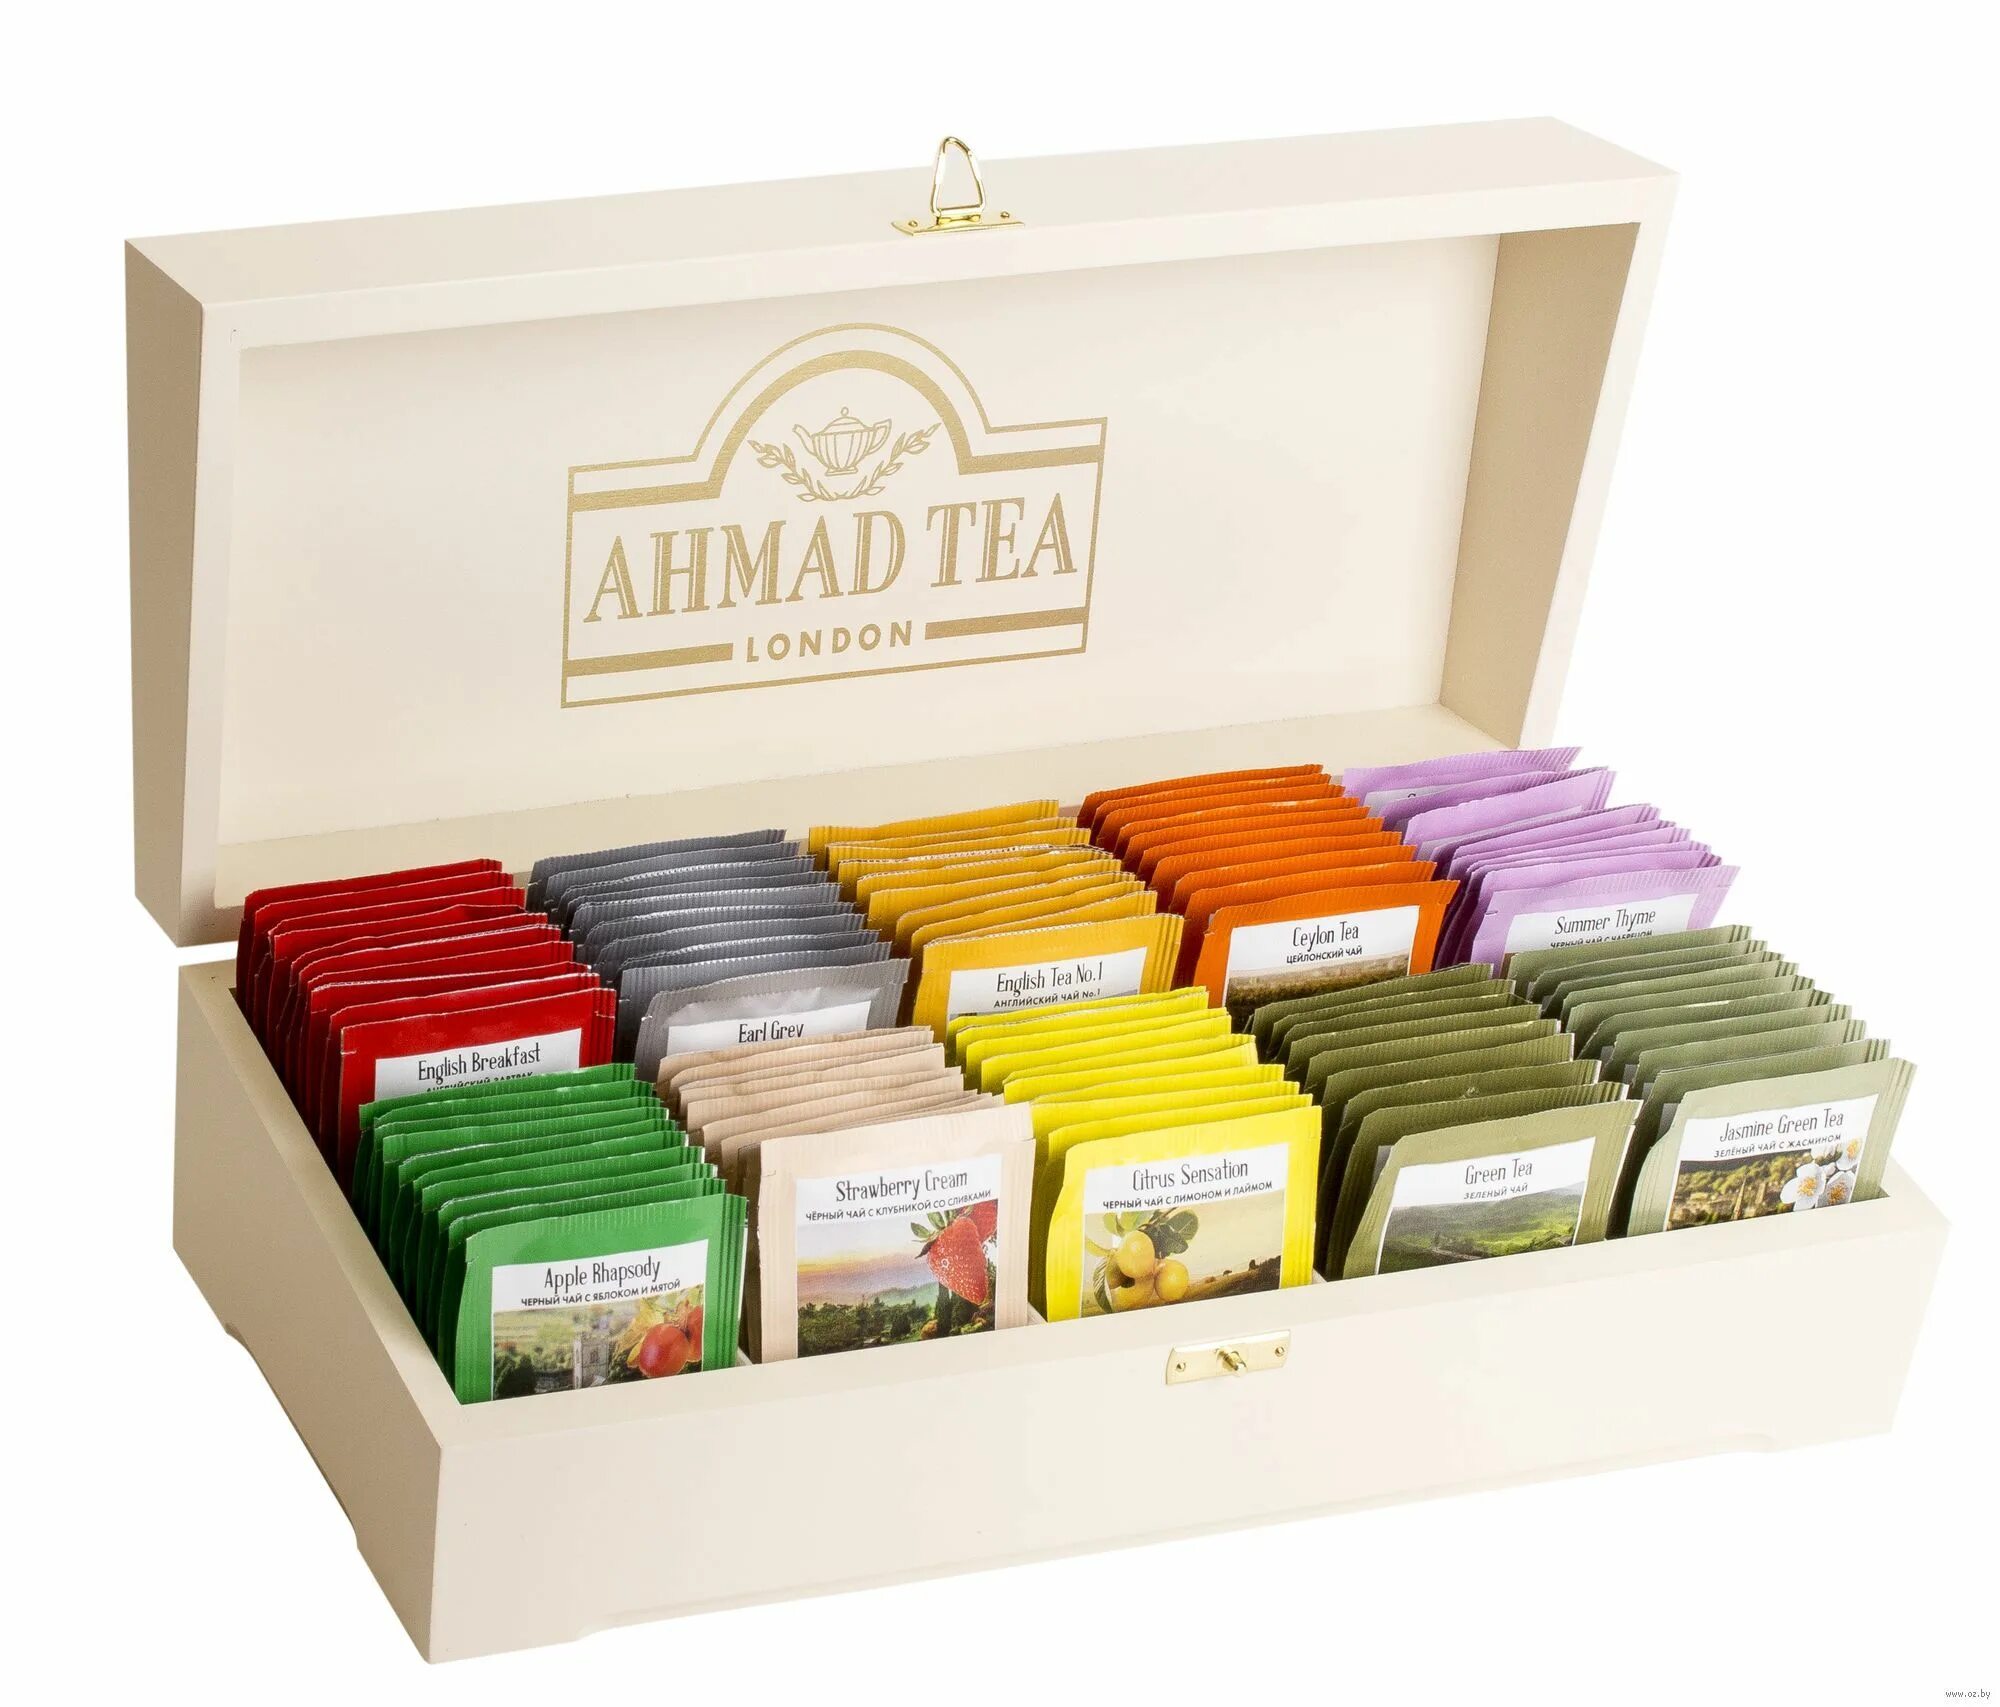 Ахмад чайное ассорти 100 пакетиков. Ахмад Теа набор чая. Чай Ахмад в пакетиках ассорти. Чай Ахмад ассорти 100 пакетиков. Где купить чай в пакетиках